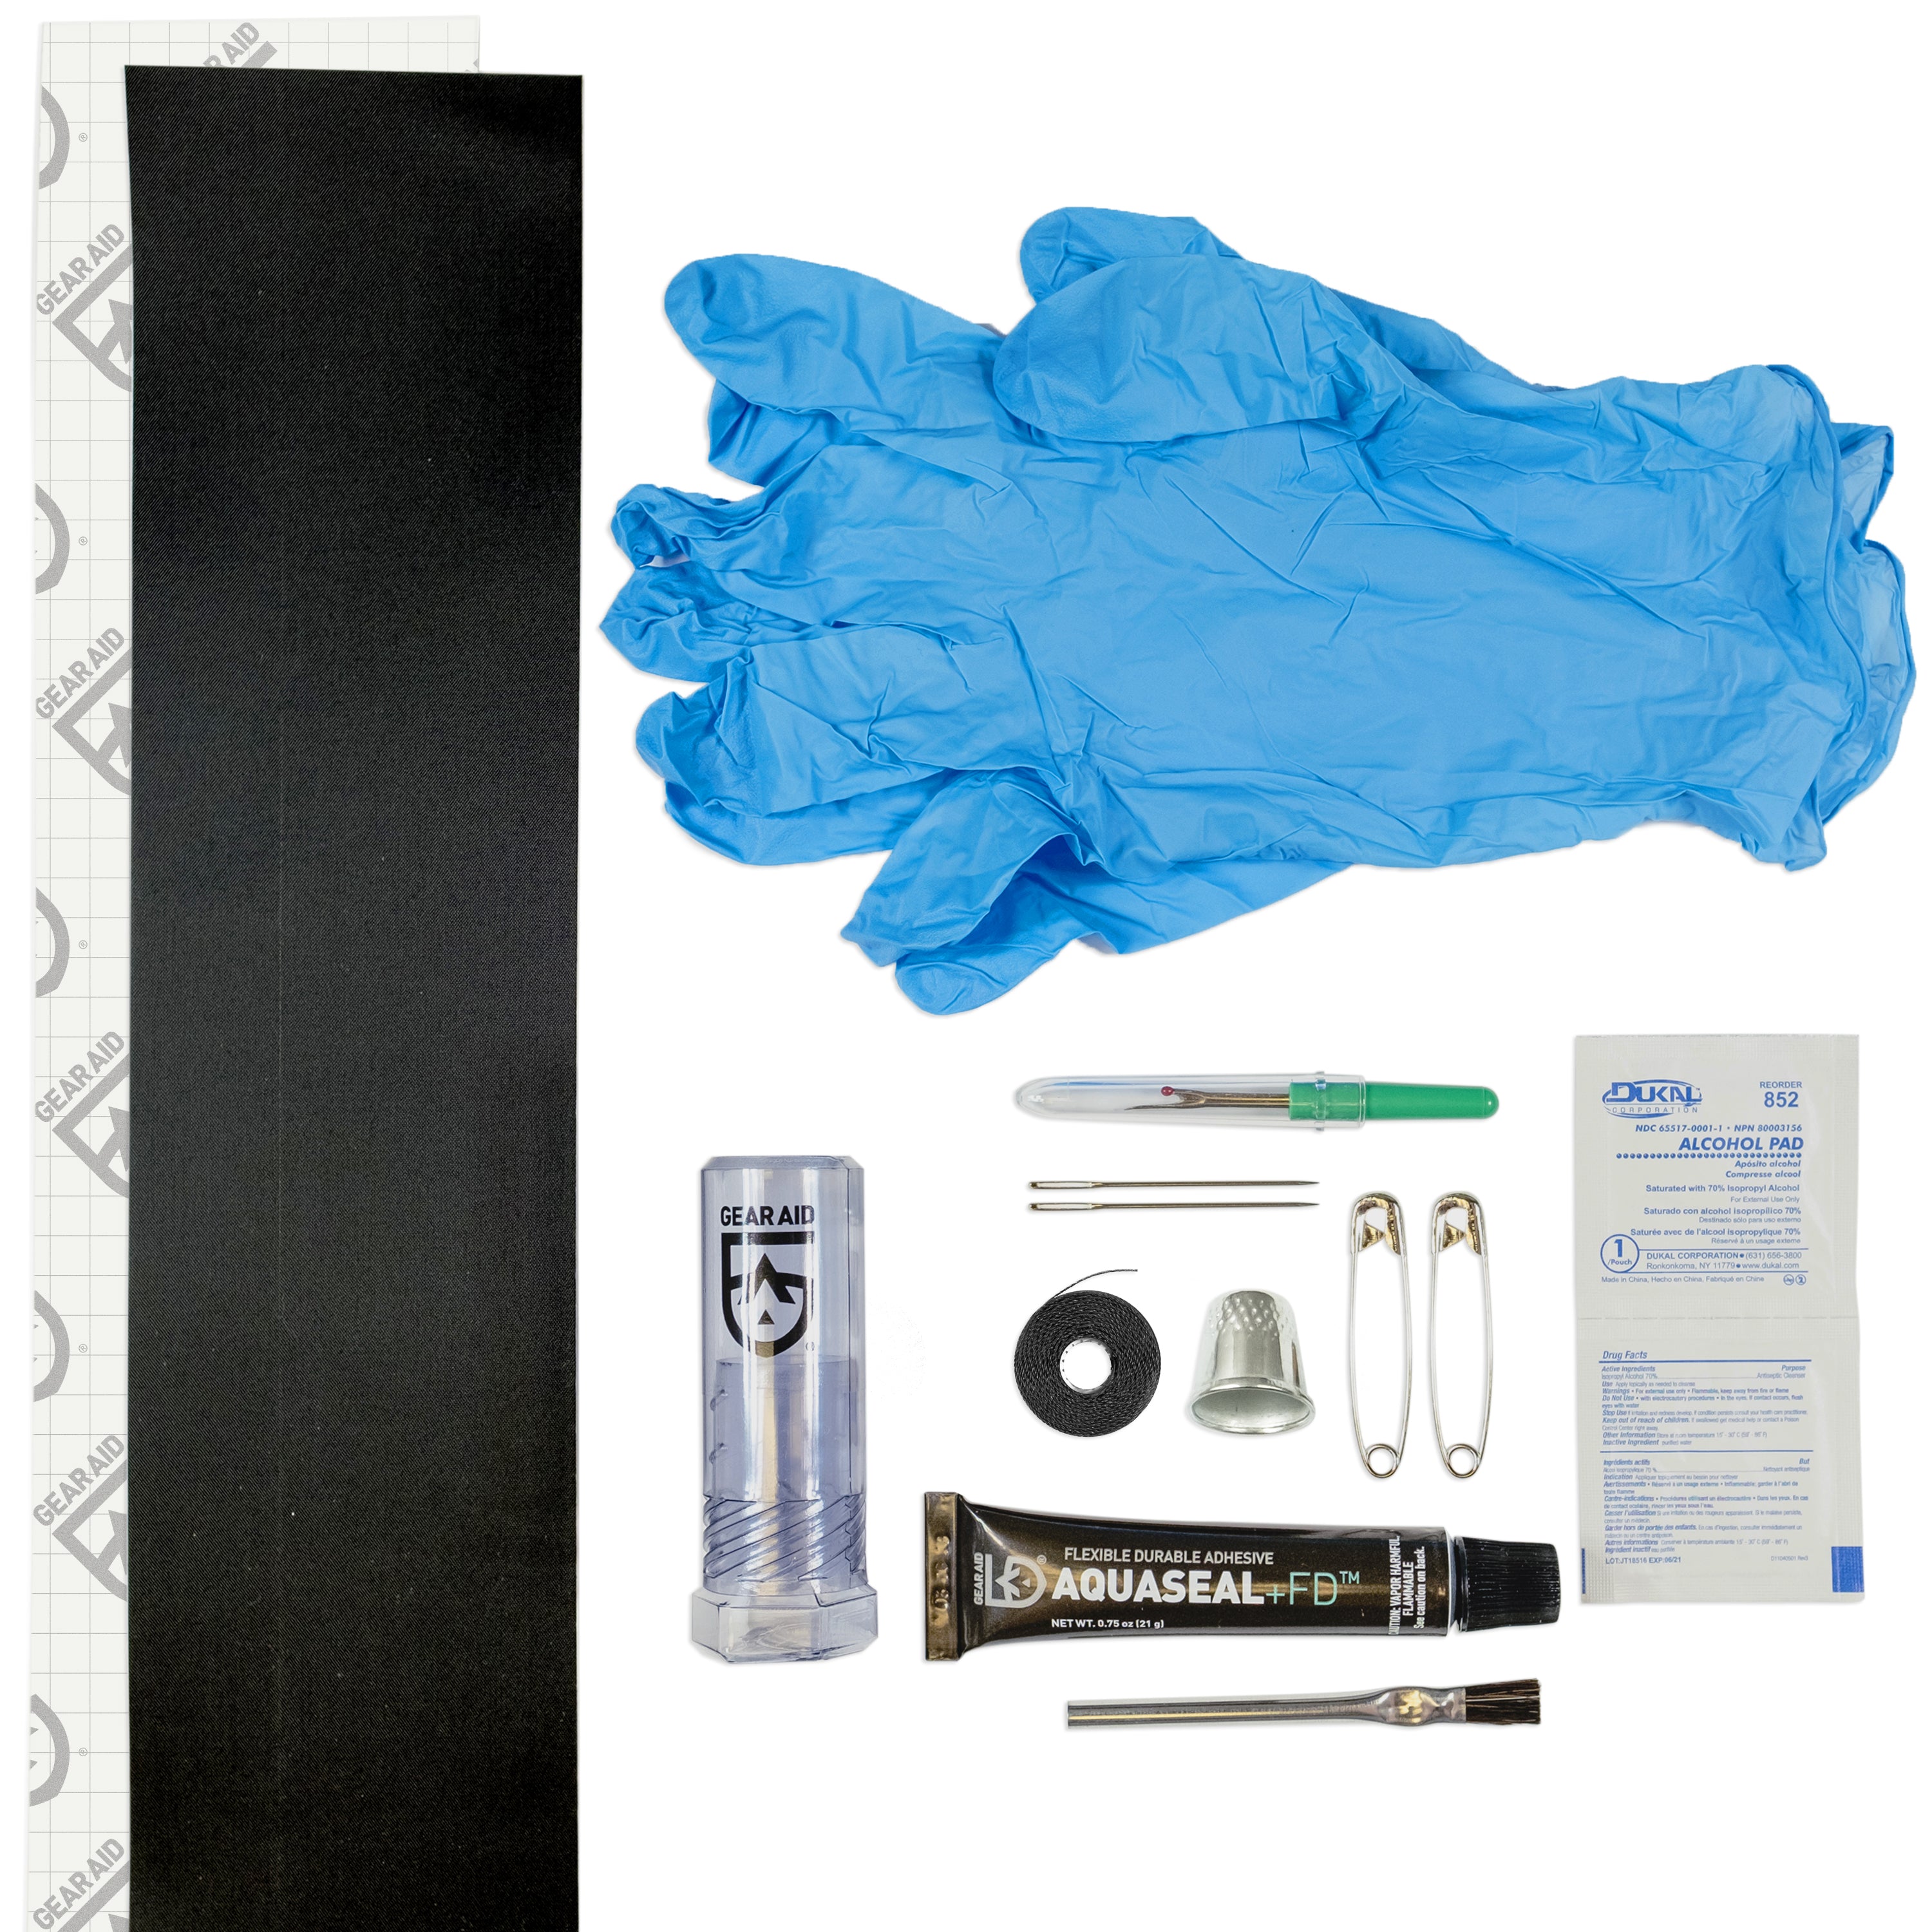 Gear Aid Aquaseal FD Repair Kit for air mattresses, inflatable pillows -  Big Sky International